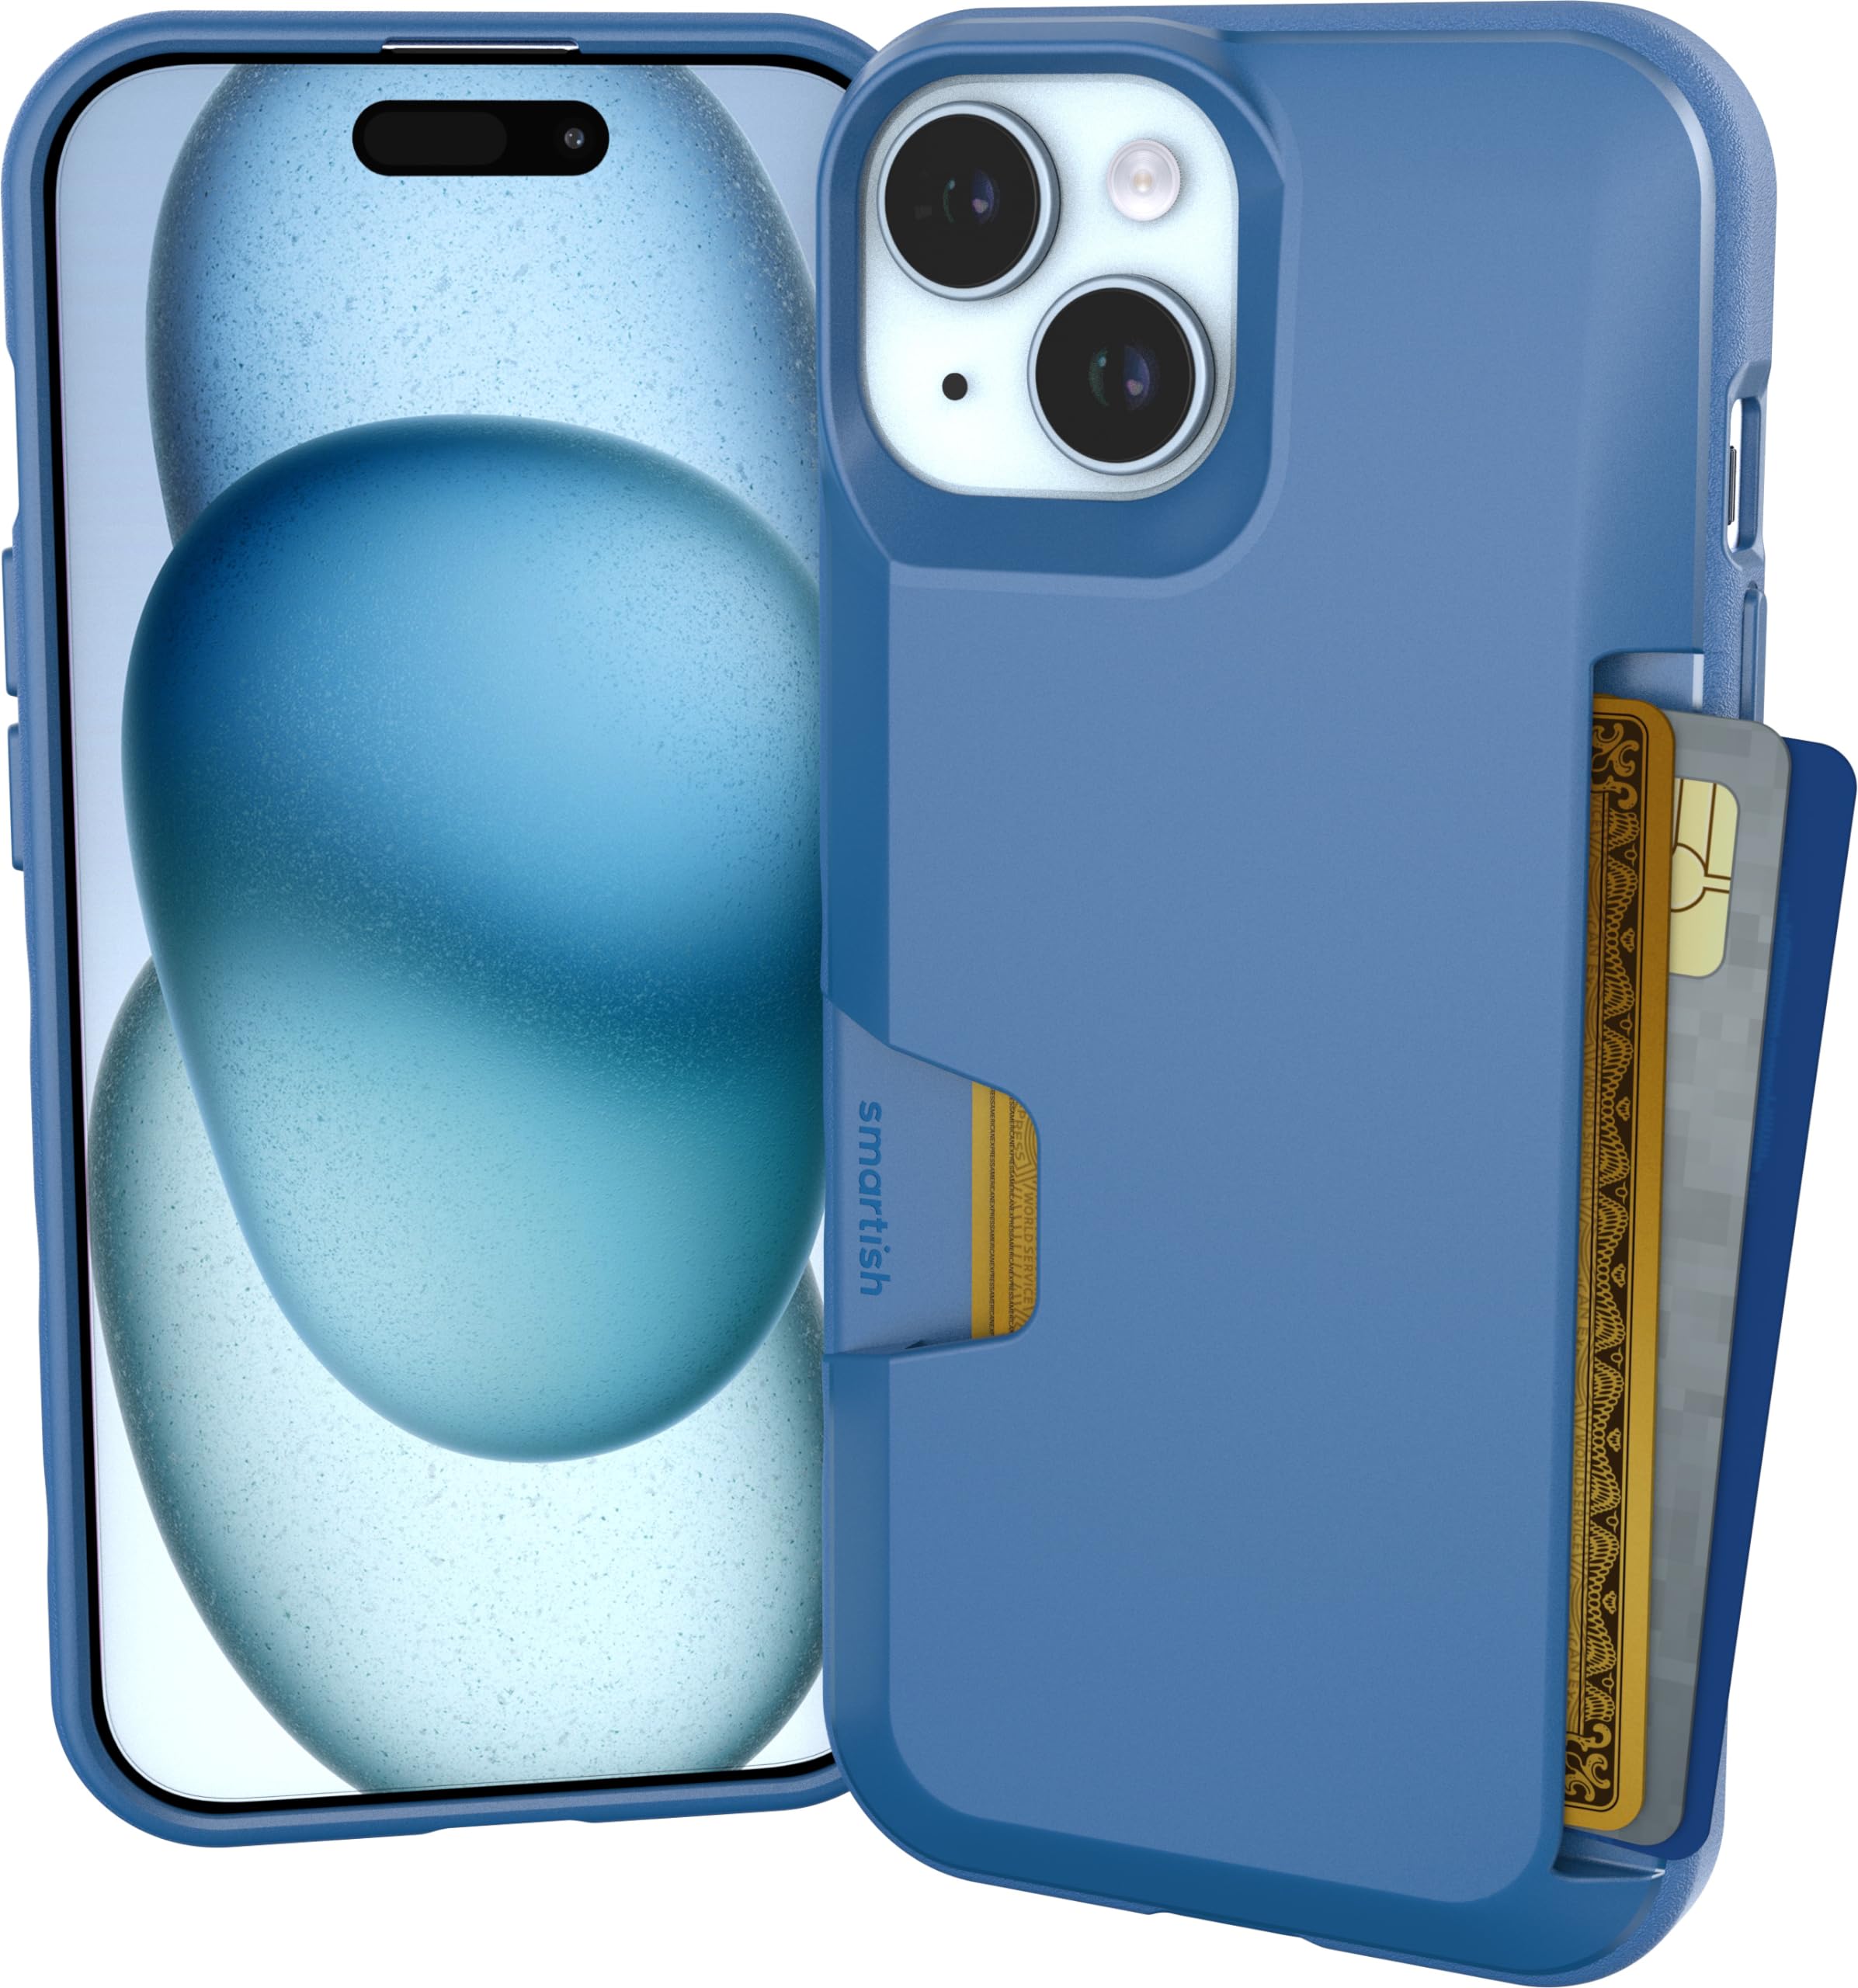 Smartish iPhone 15 Wallet Case - Wallet Slayer Vol. 1 [Slim + Protective] Credit Card Holder - Blues on The Green